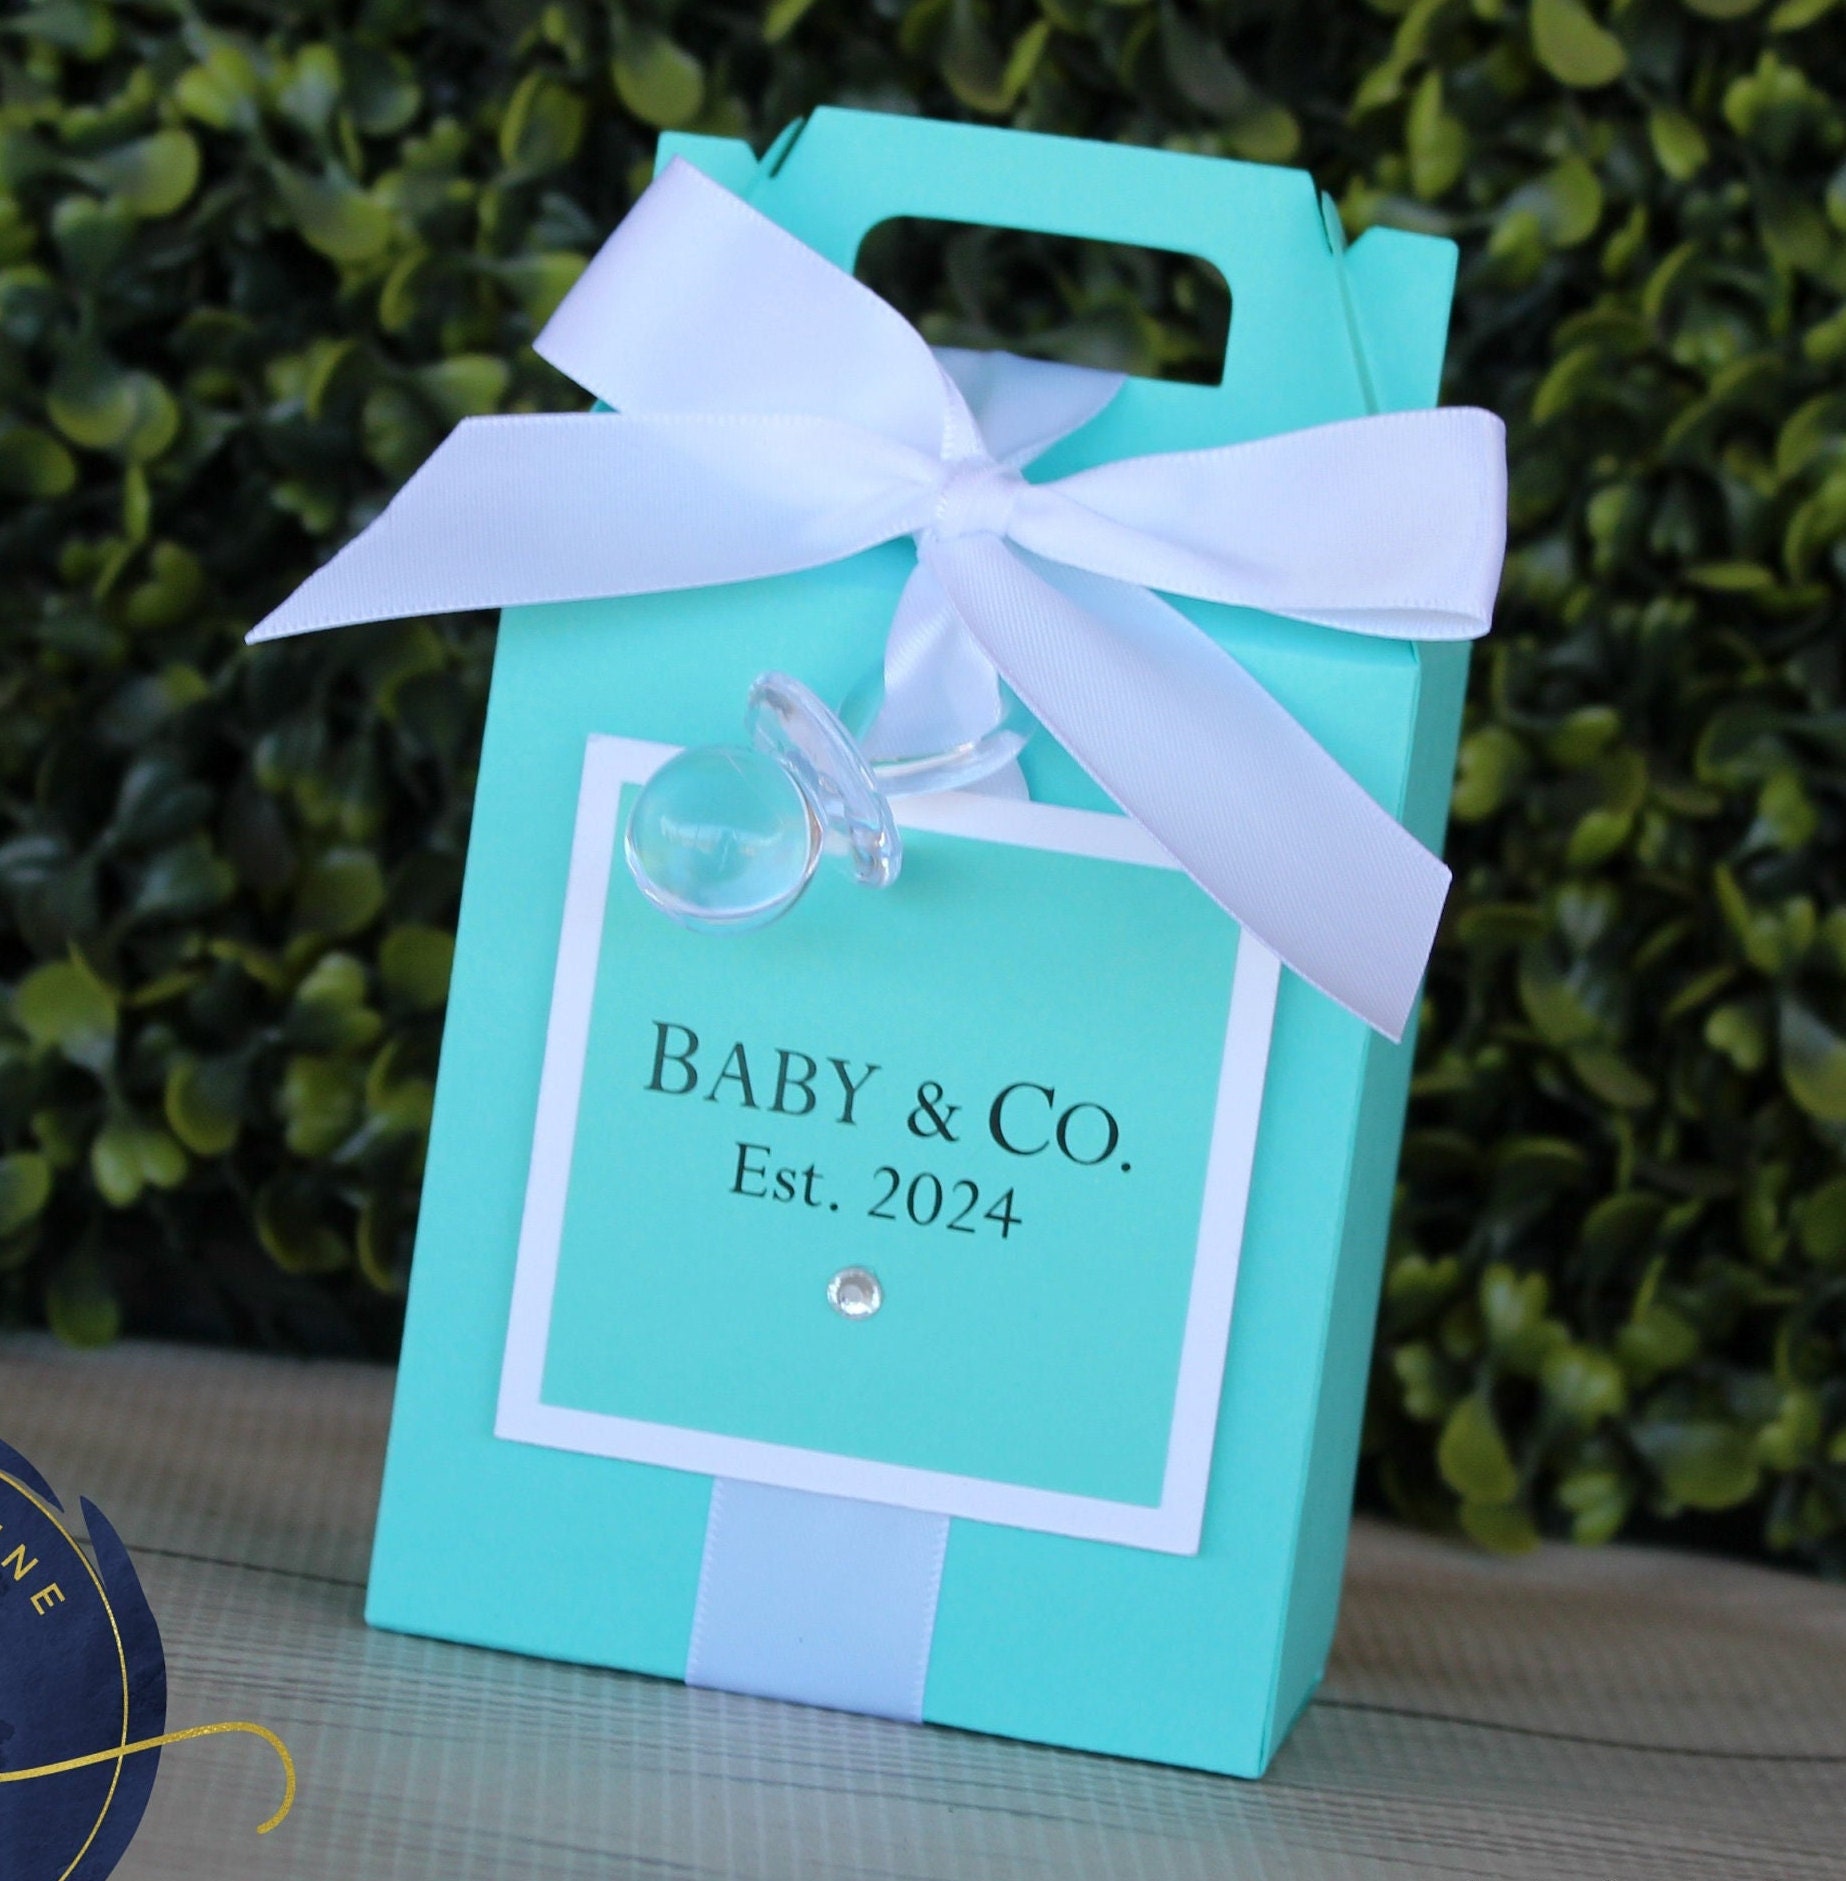 8 Gucci Theme ideas  personalized favor boxes, treat boxes, personalized  favors